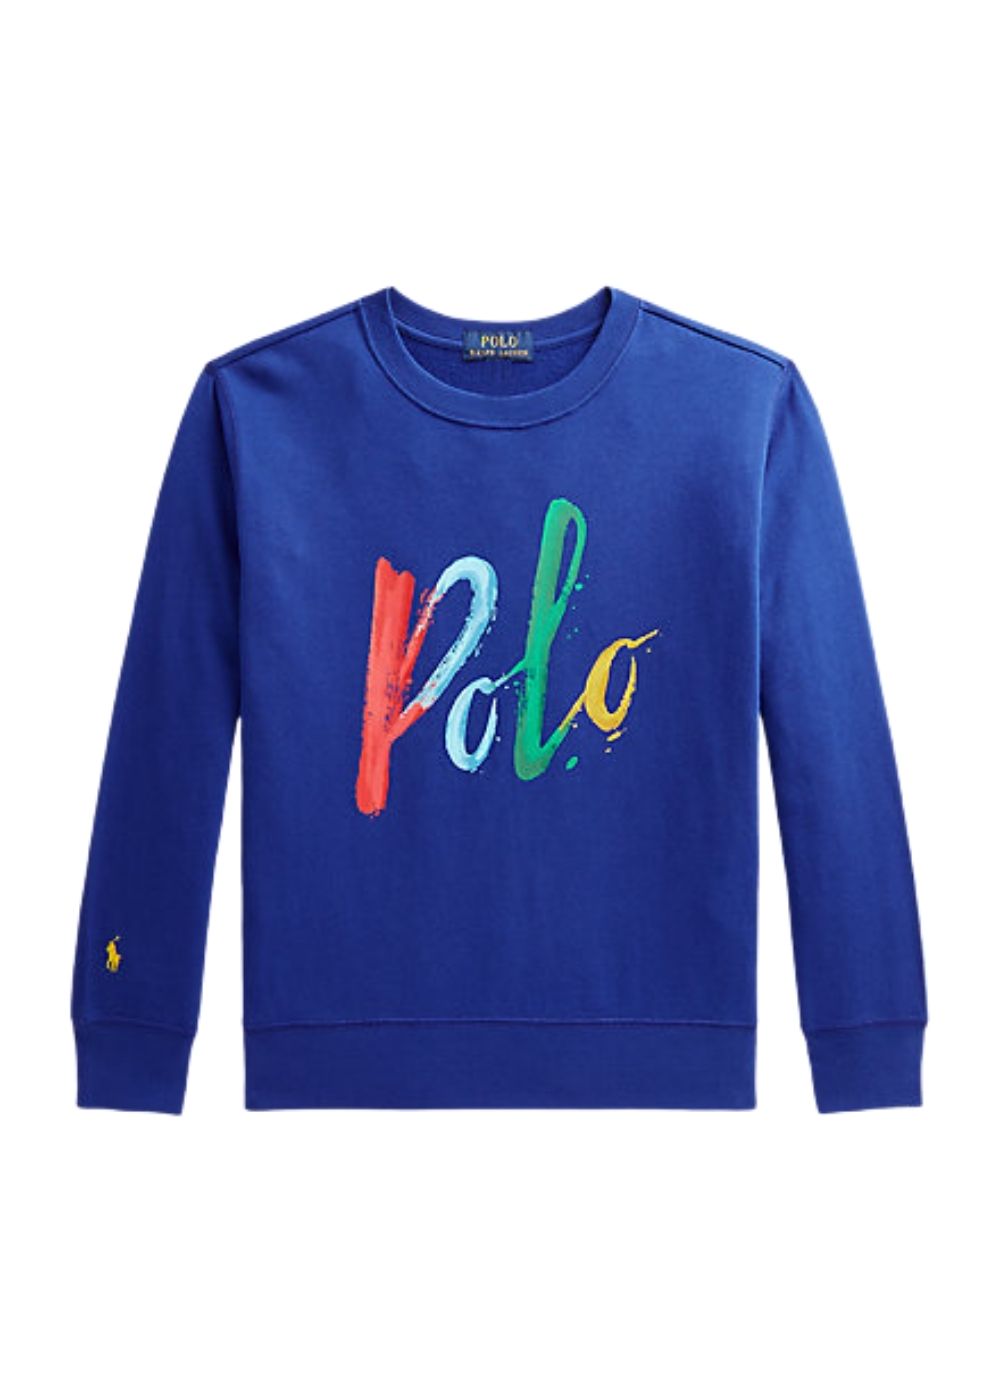 Featured image for “Polo Ralph Lauren Felpa logo”